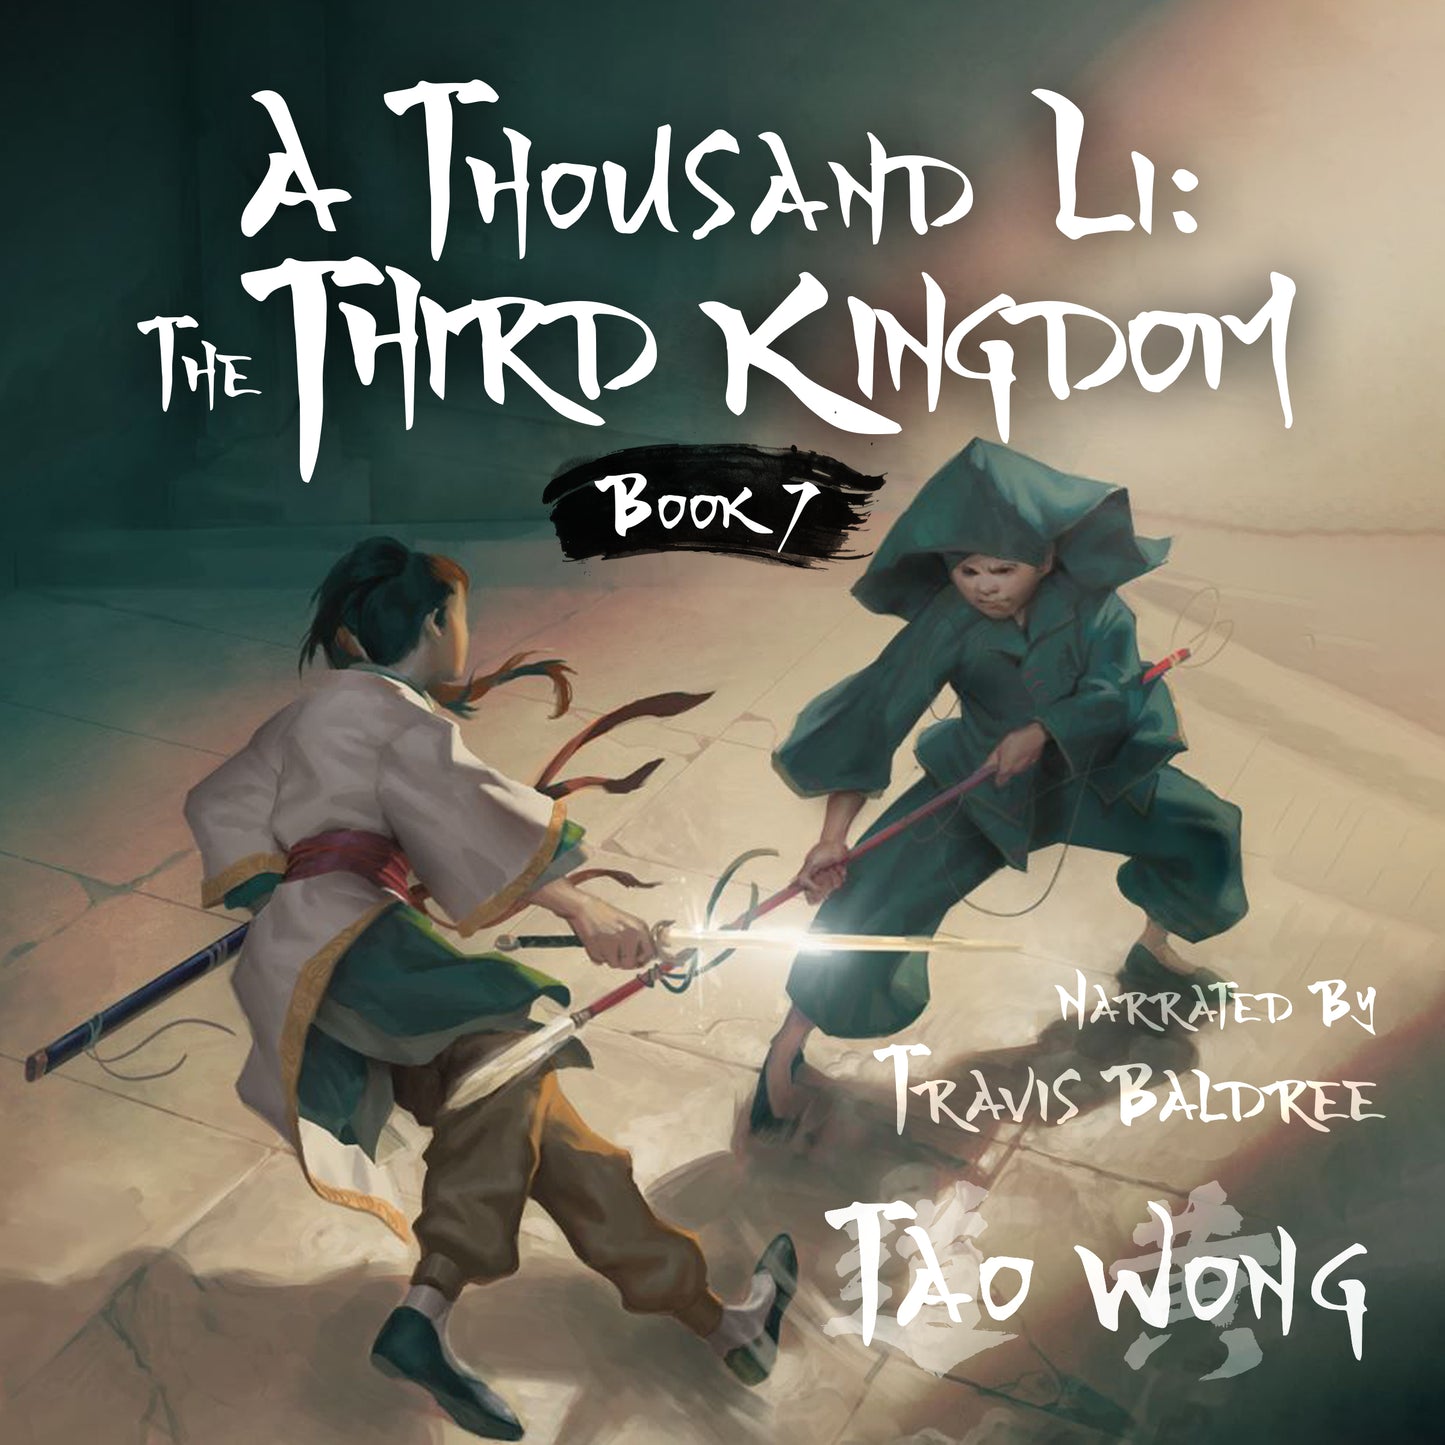 The Third Kingdom (A Thousand Li #7)